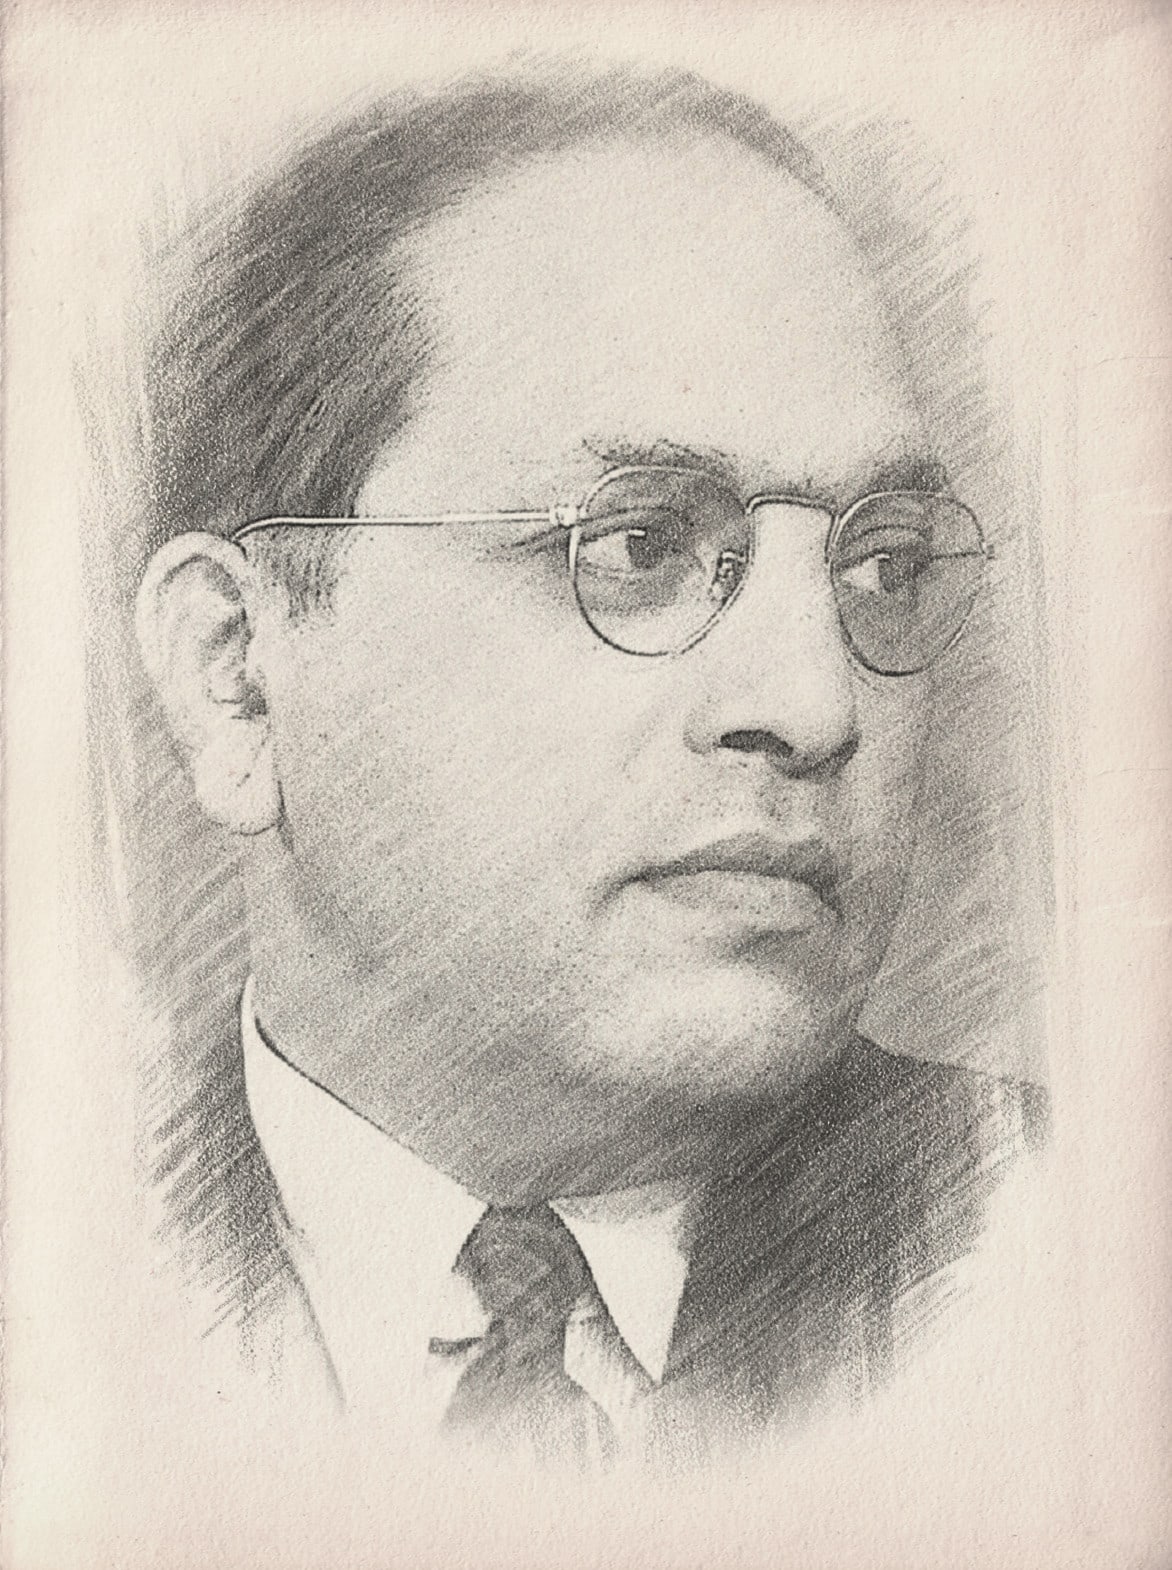 Bhimrao Ambedkar